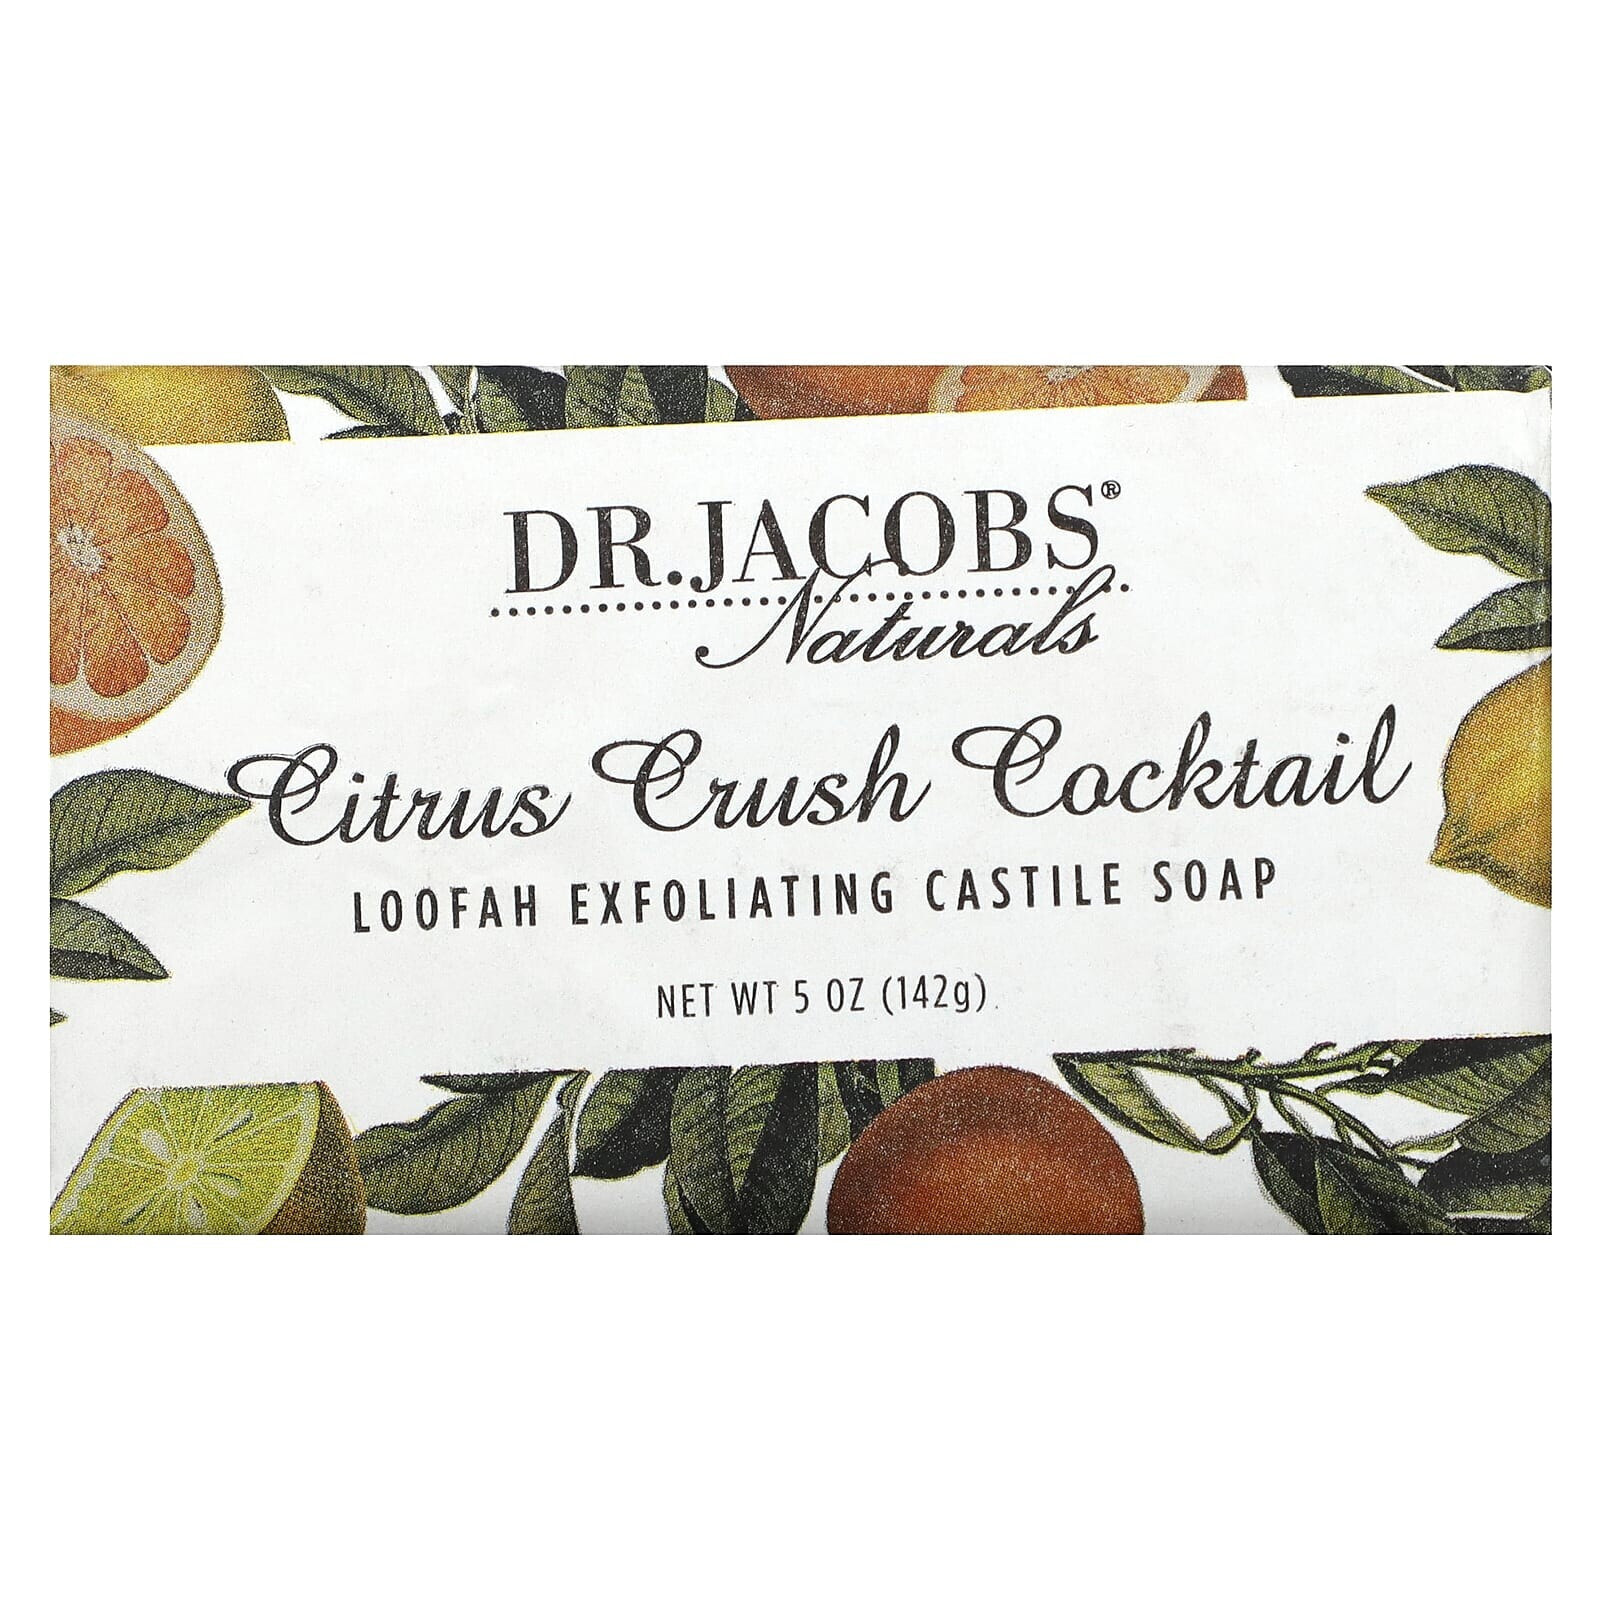 Loofah Exfoliating Castile Bar Soap, Citrus Crush Cocktail, 5 oz (142 g)